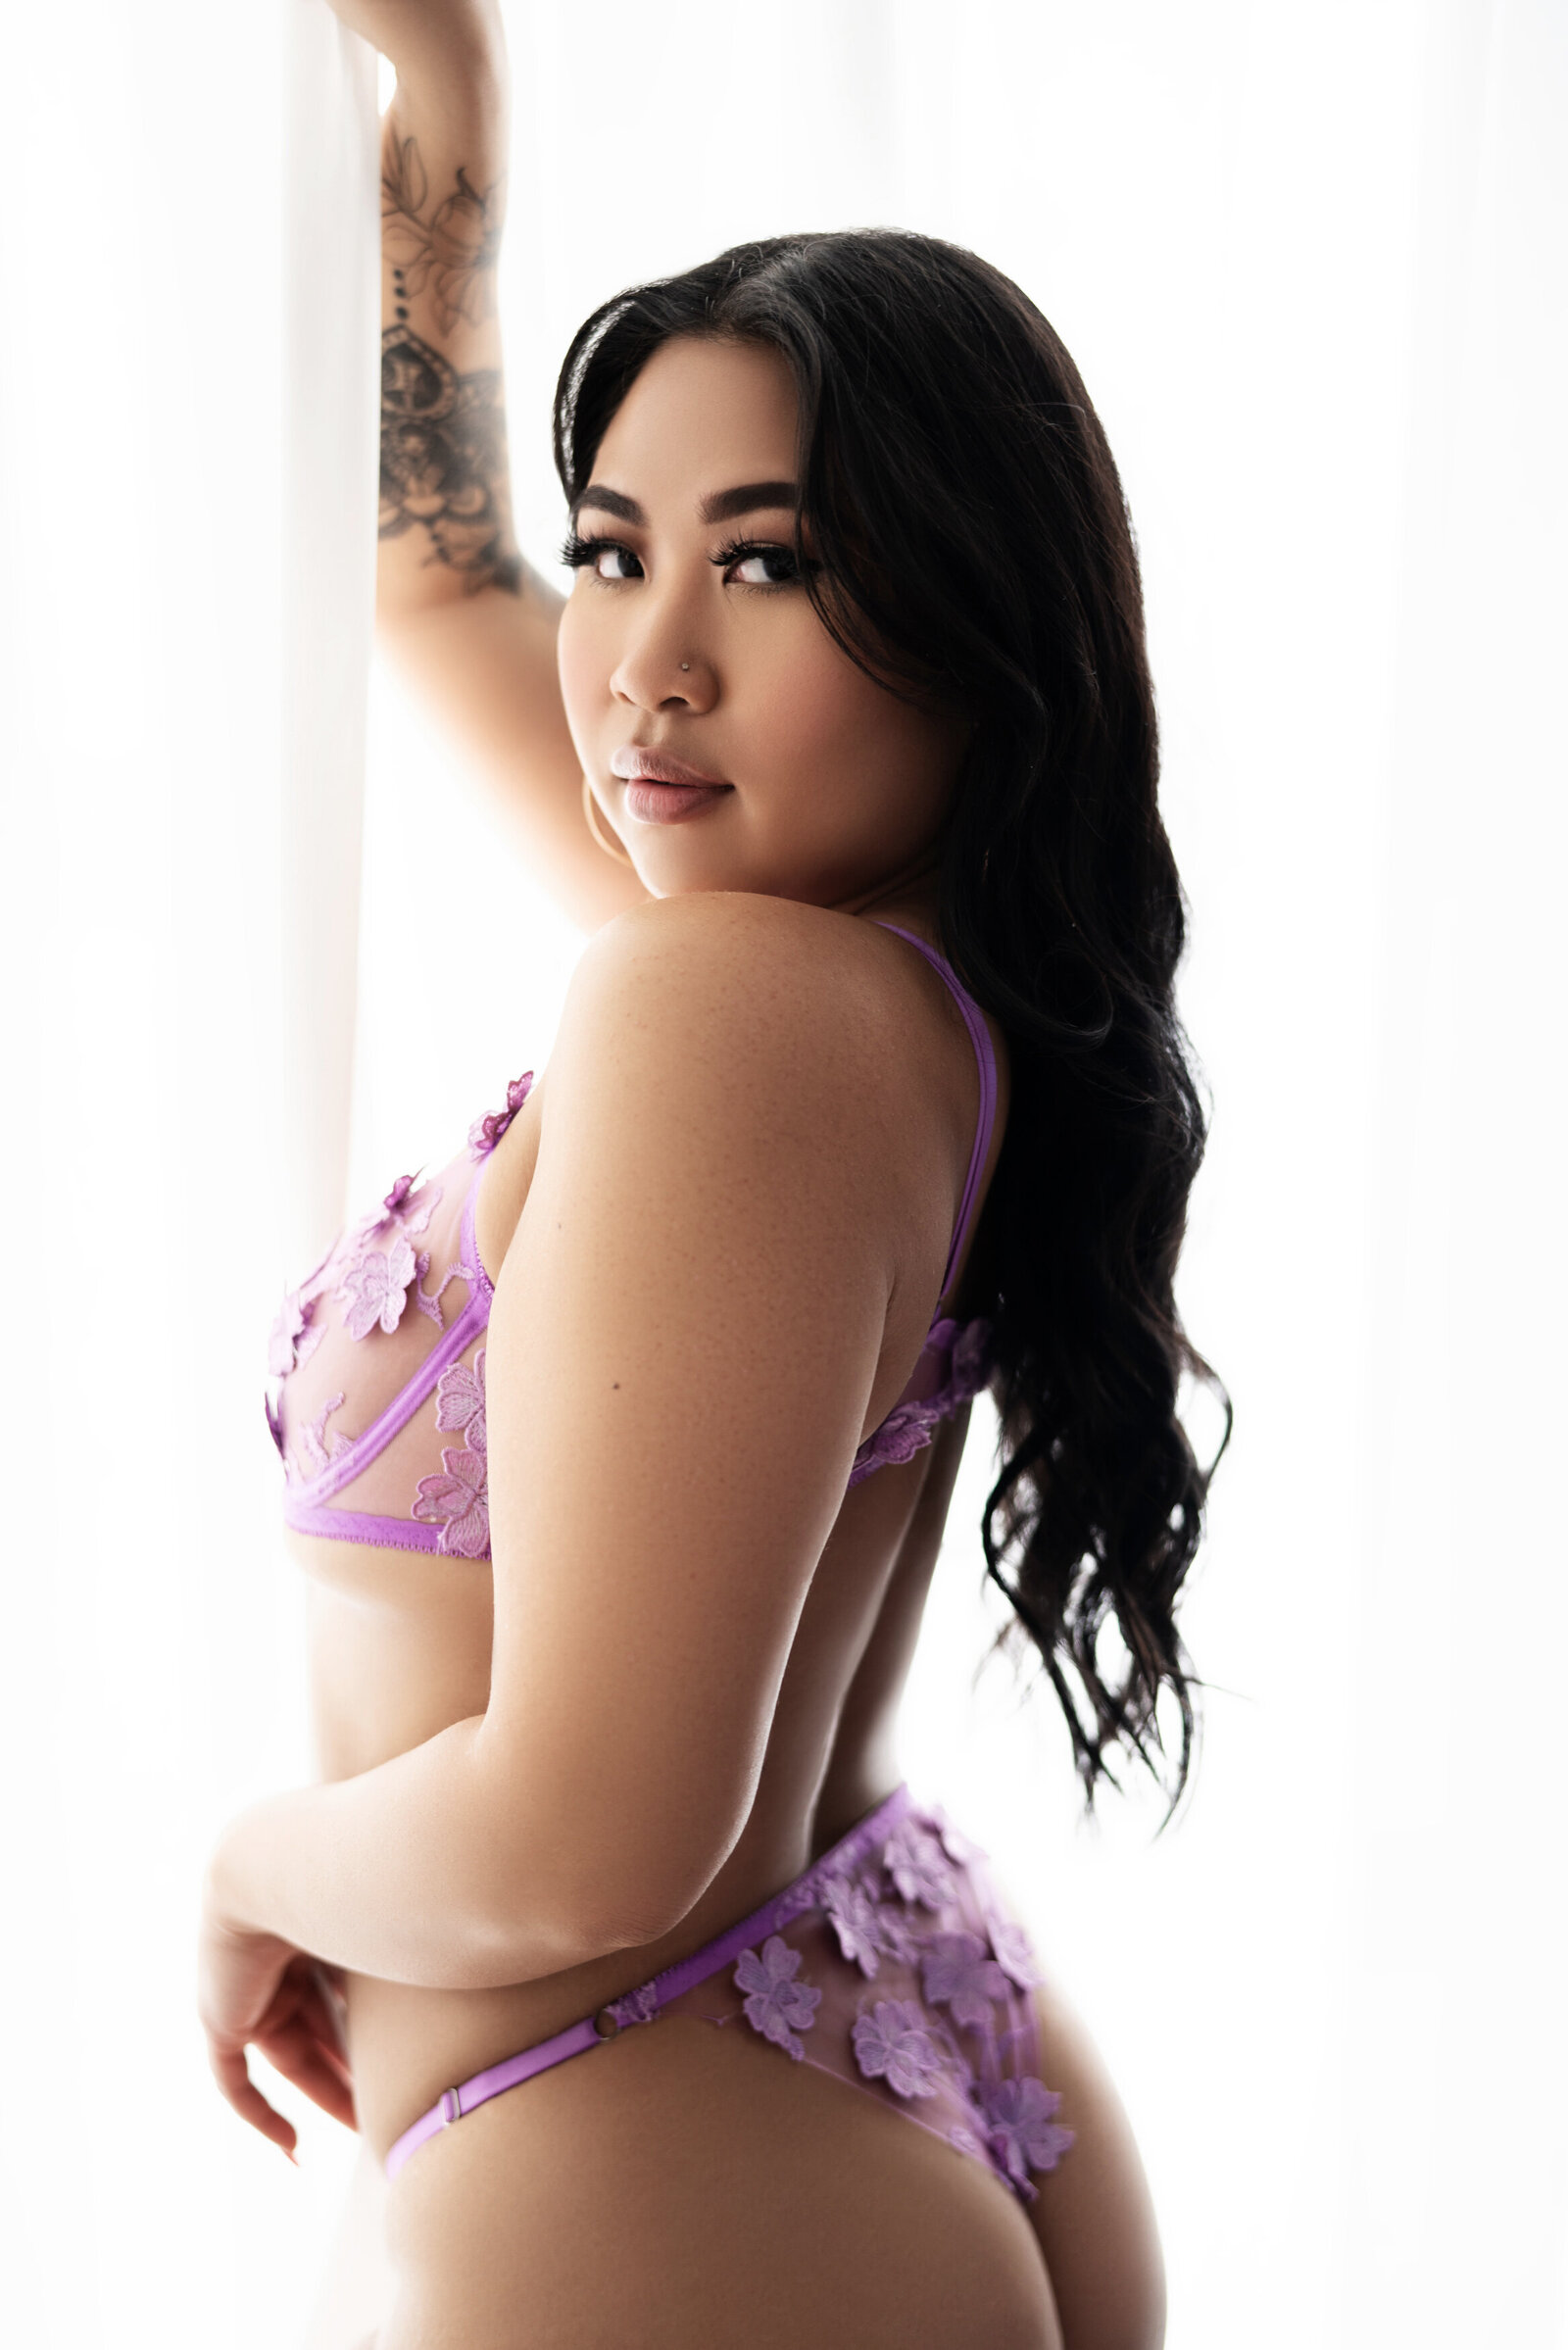 asian woman in purple flower lace lingerie at window